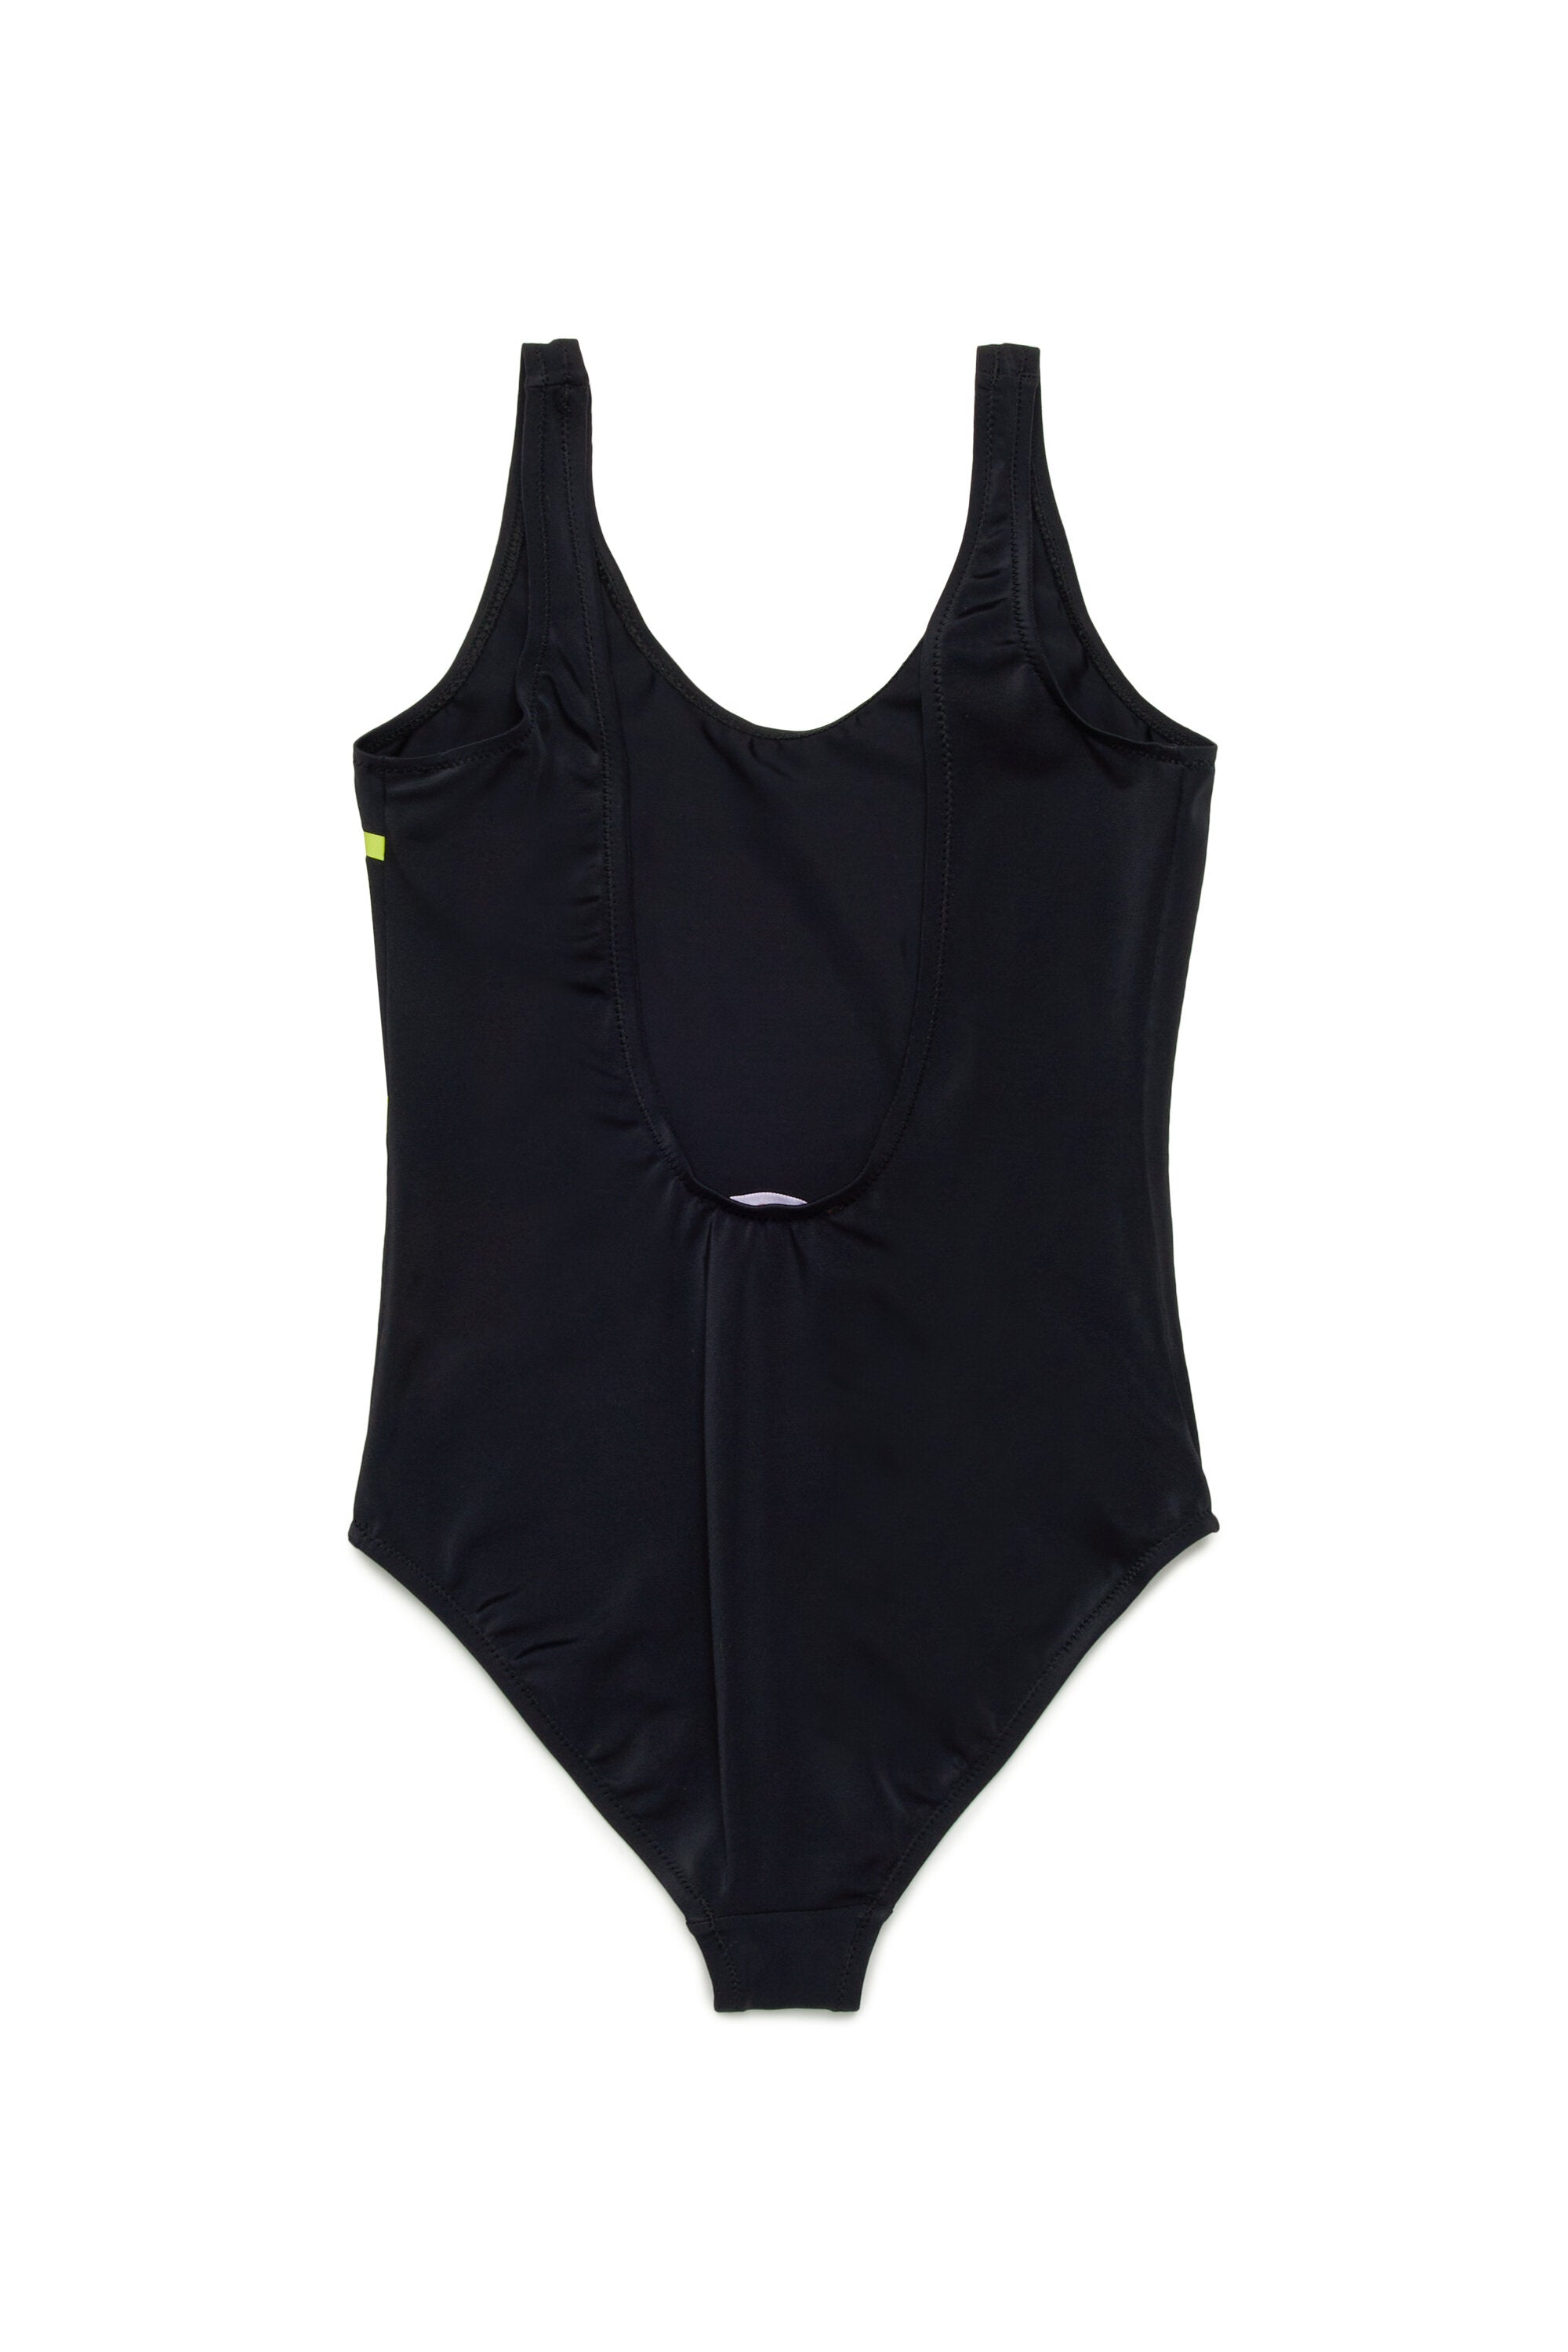 Oval D one-piece swimsuit